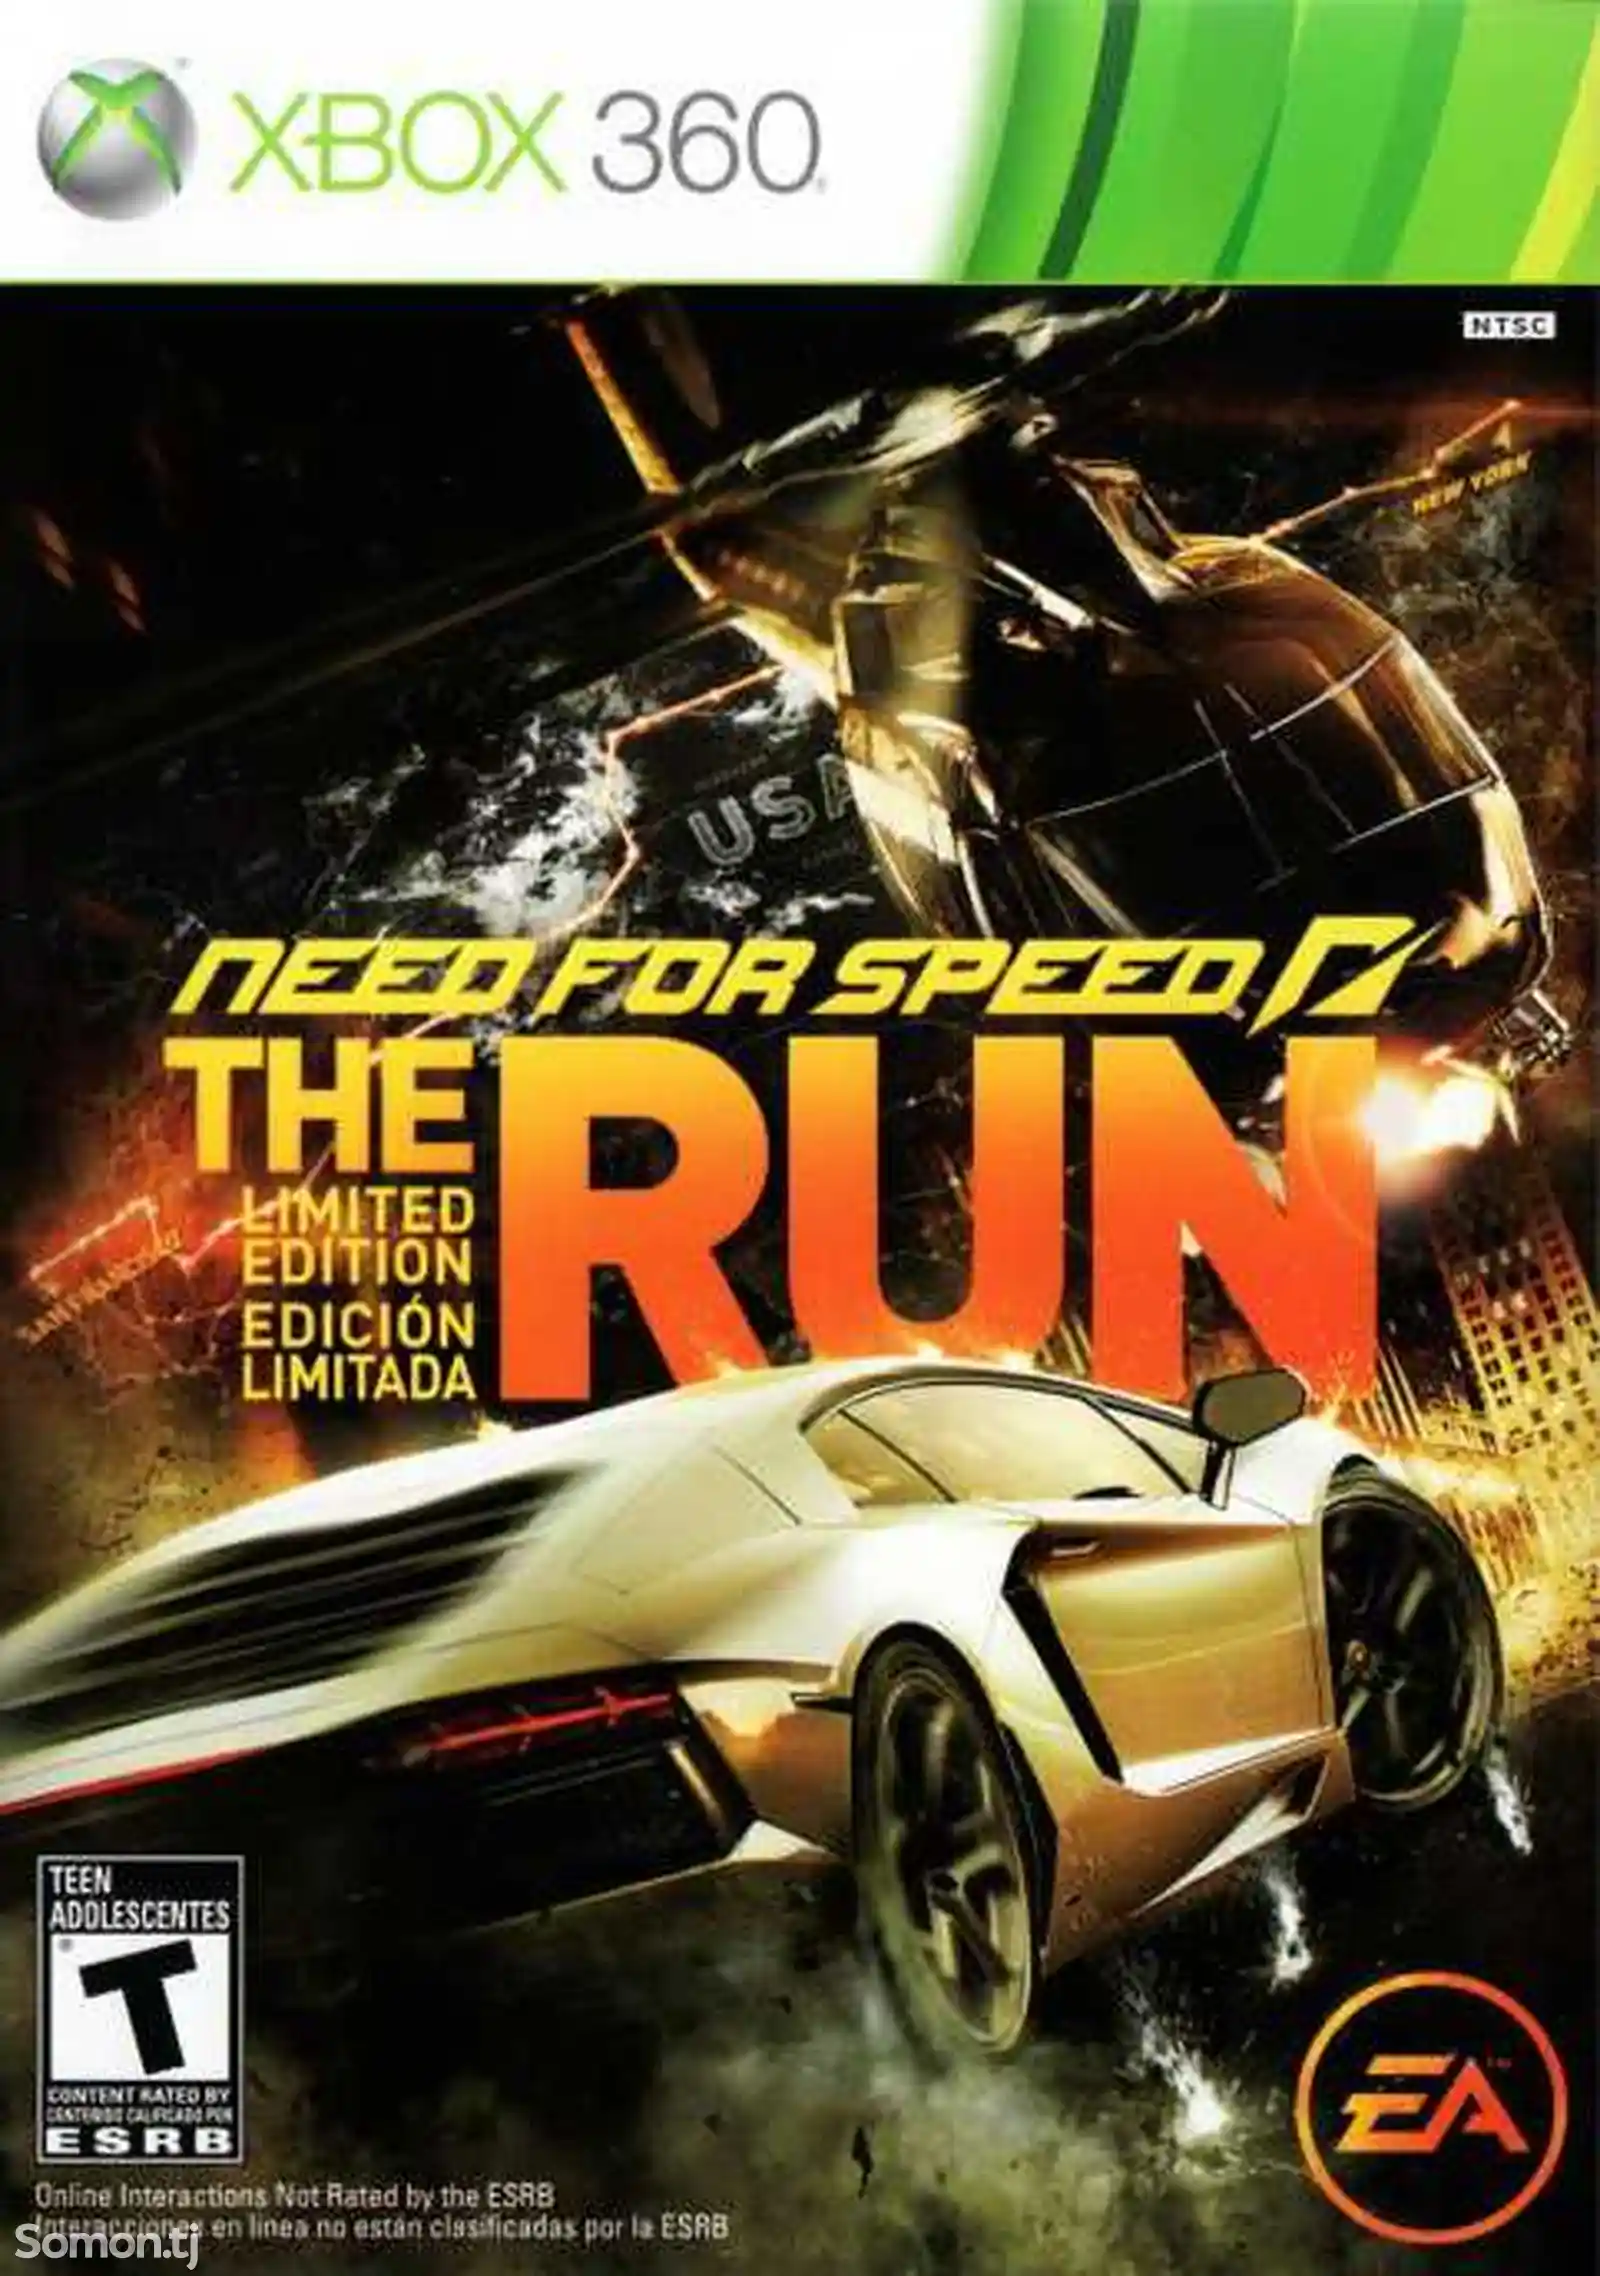 Игра Nfs The run для прошитых Xbox 360